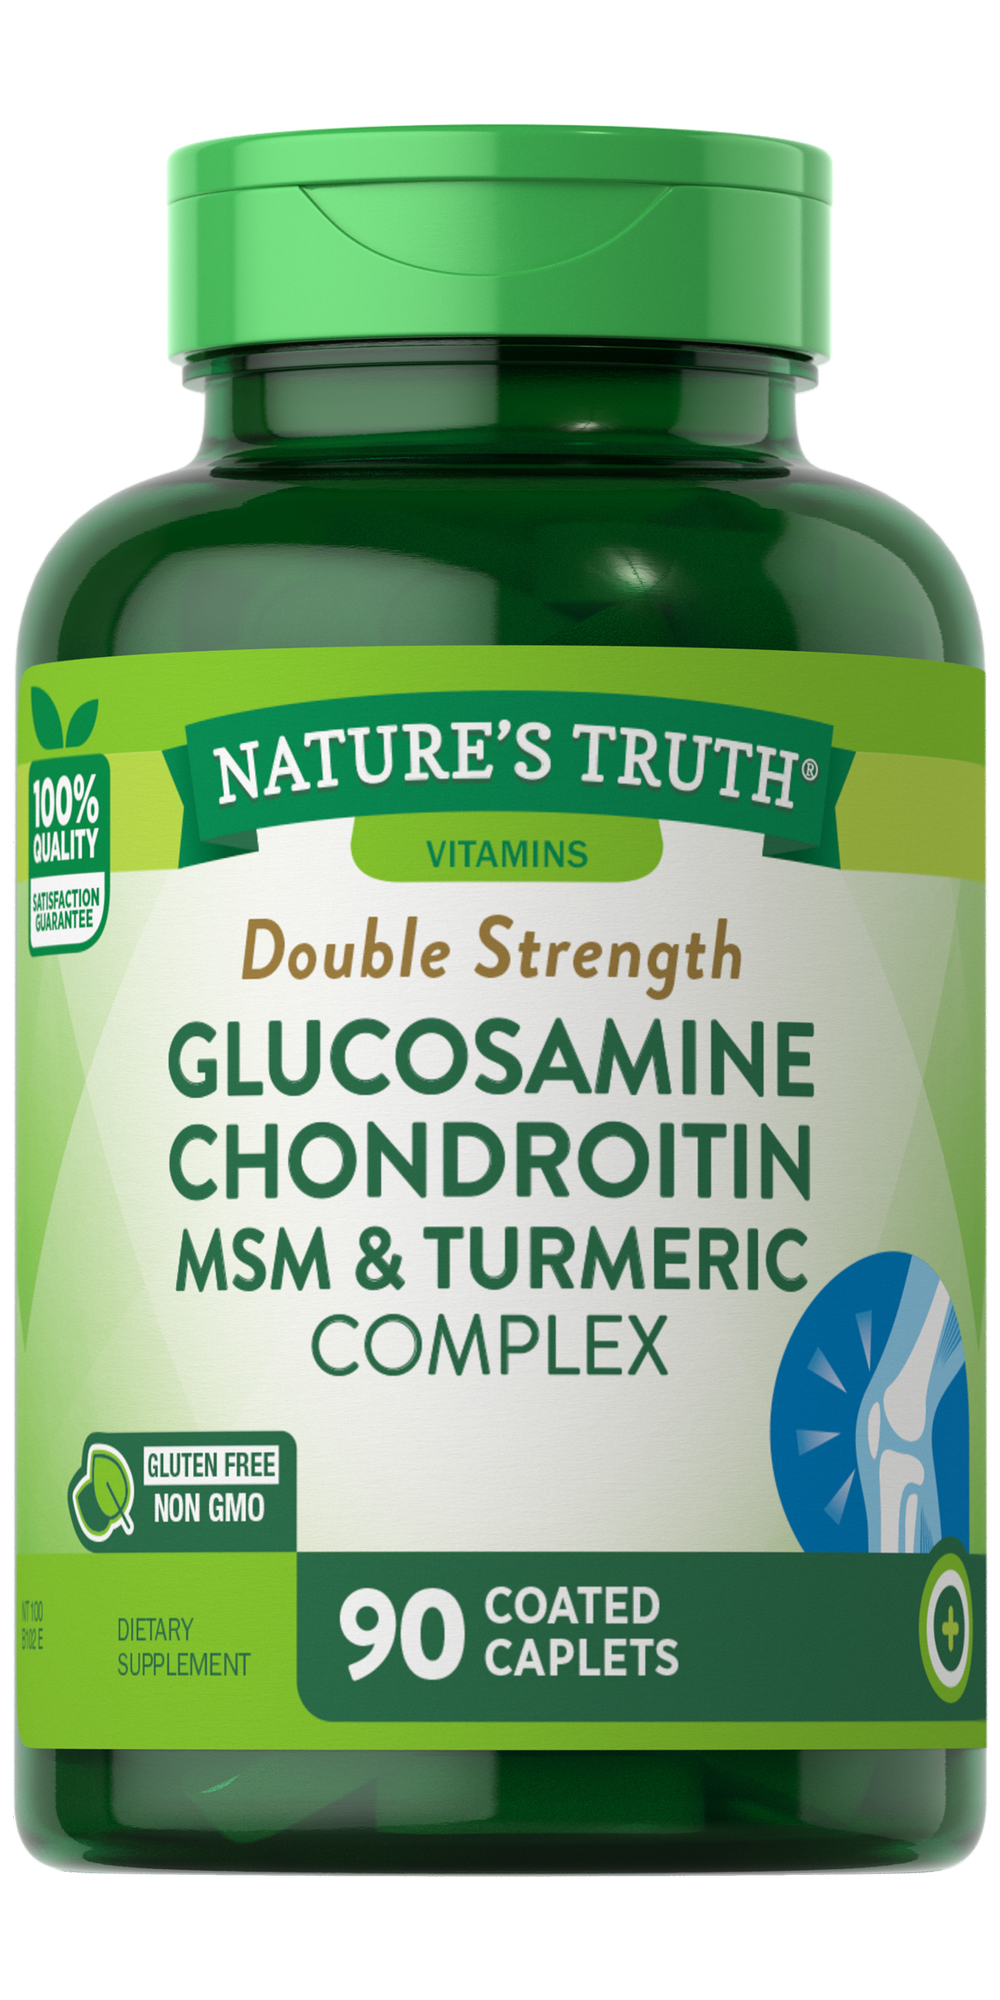 Glucosamine Chondroitin MSM & Turmeric Complex | Double Strength